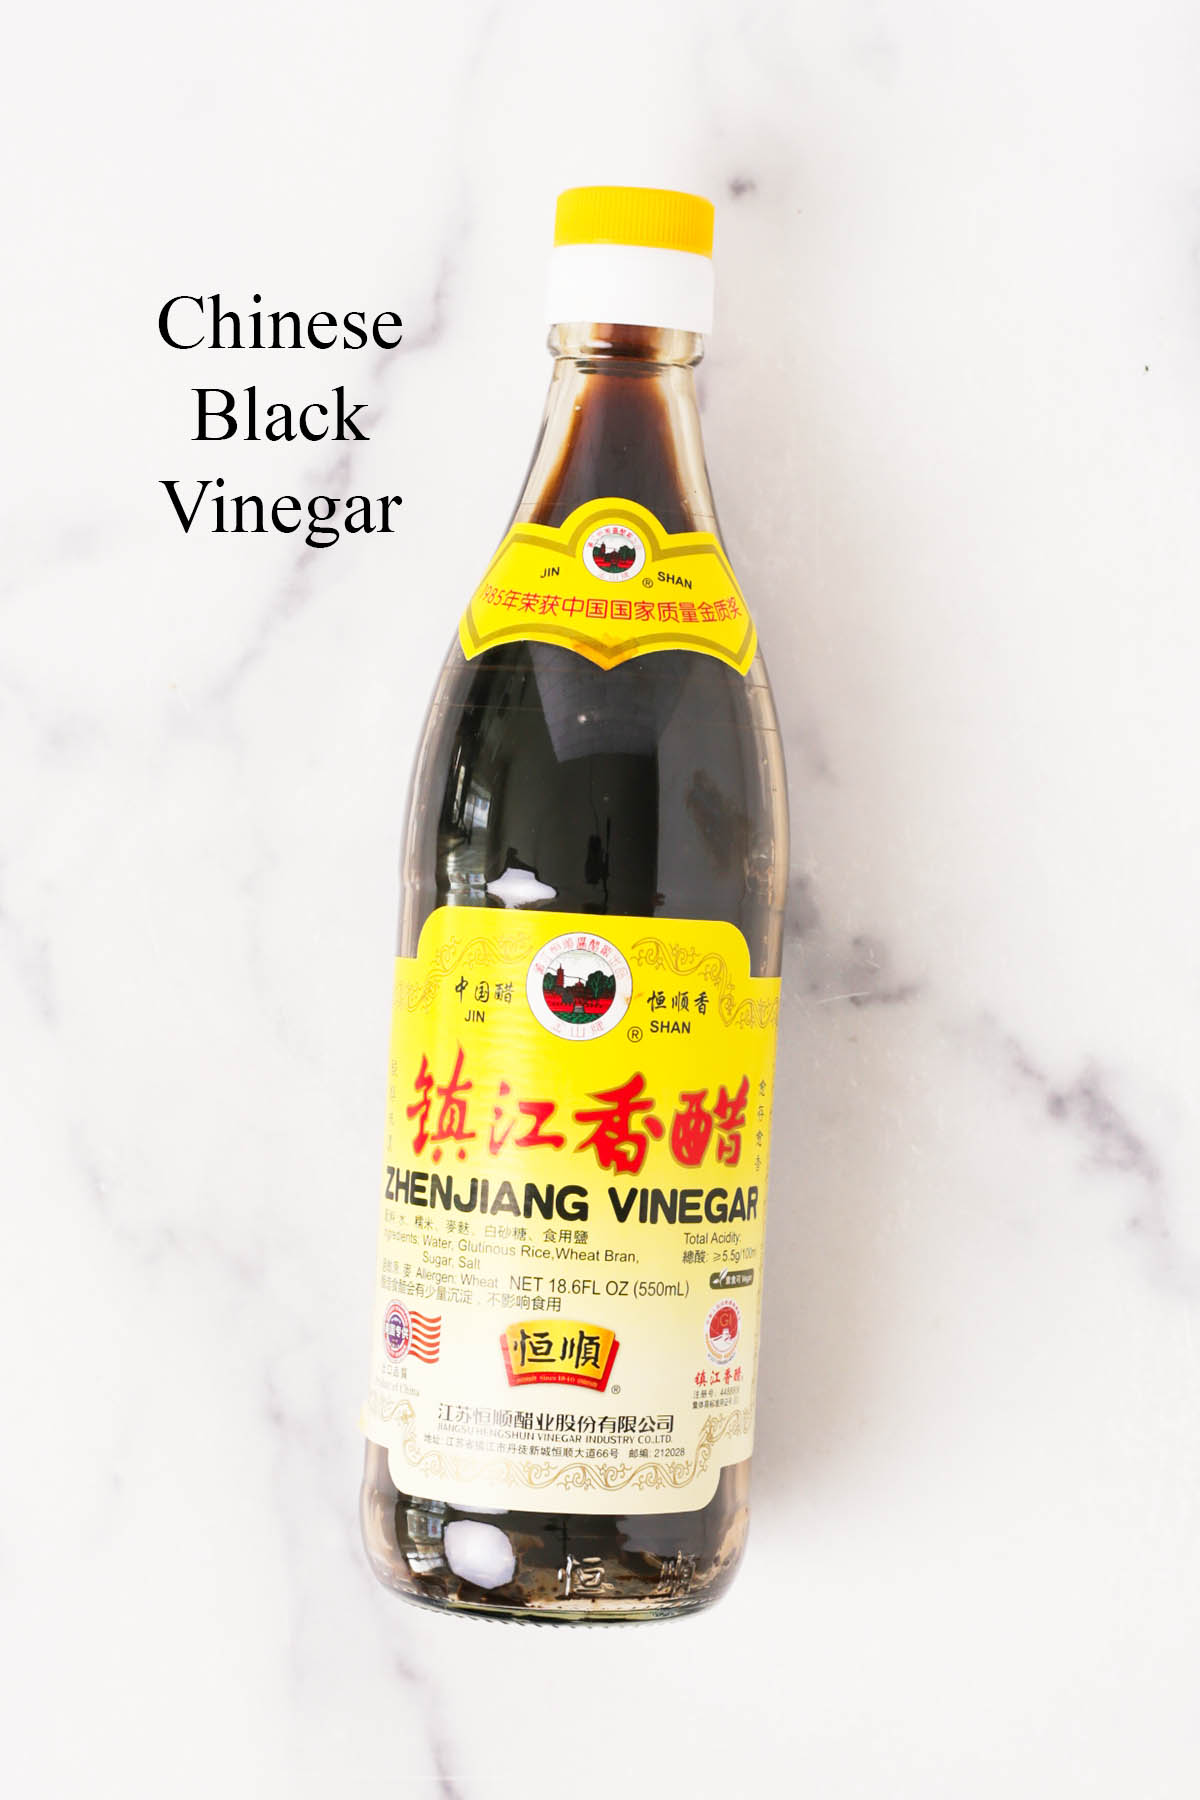 A bottle of Zhenjiang black vinegar.